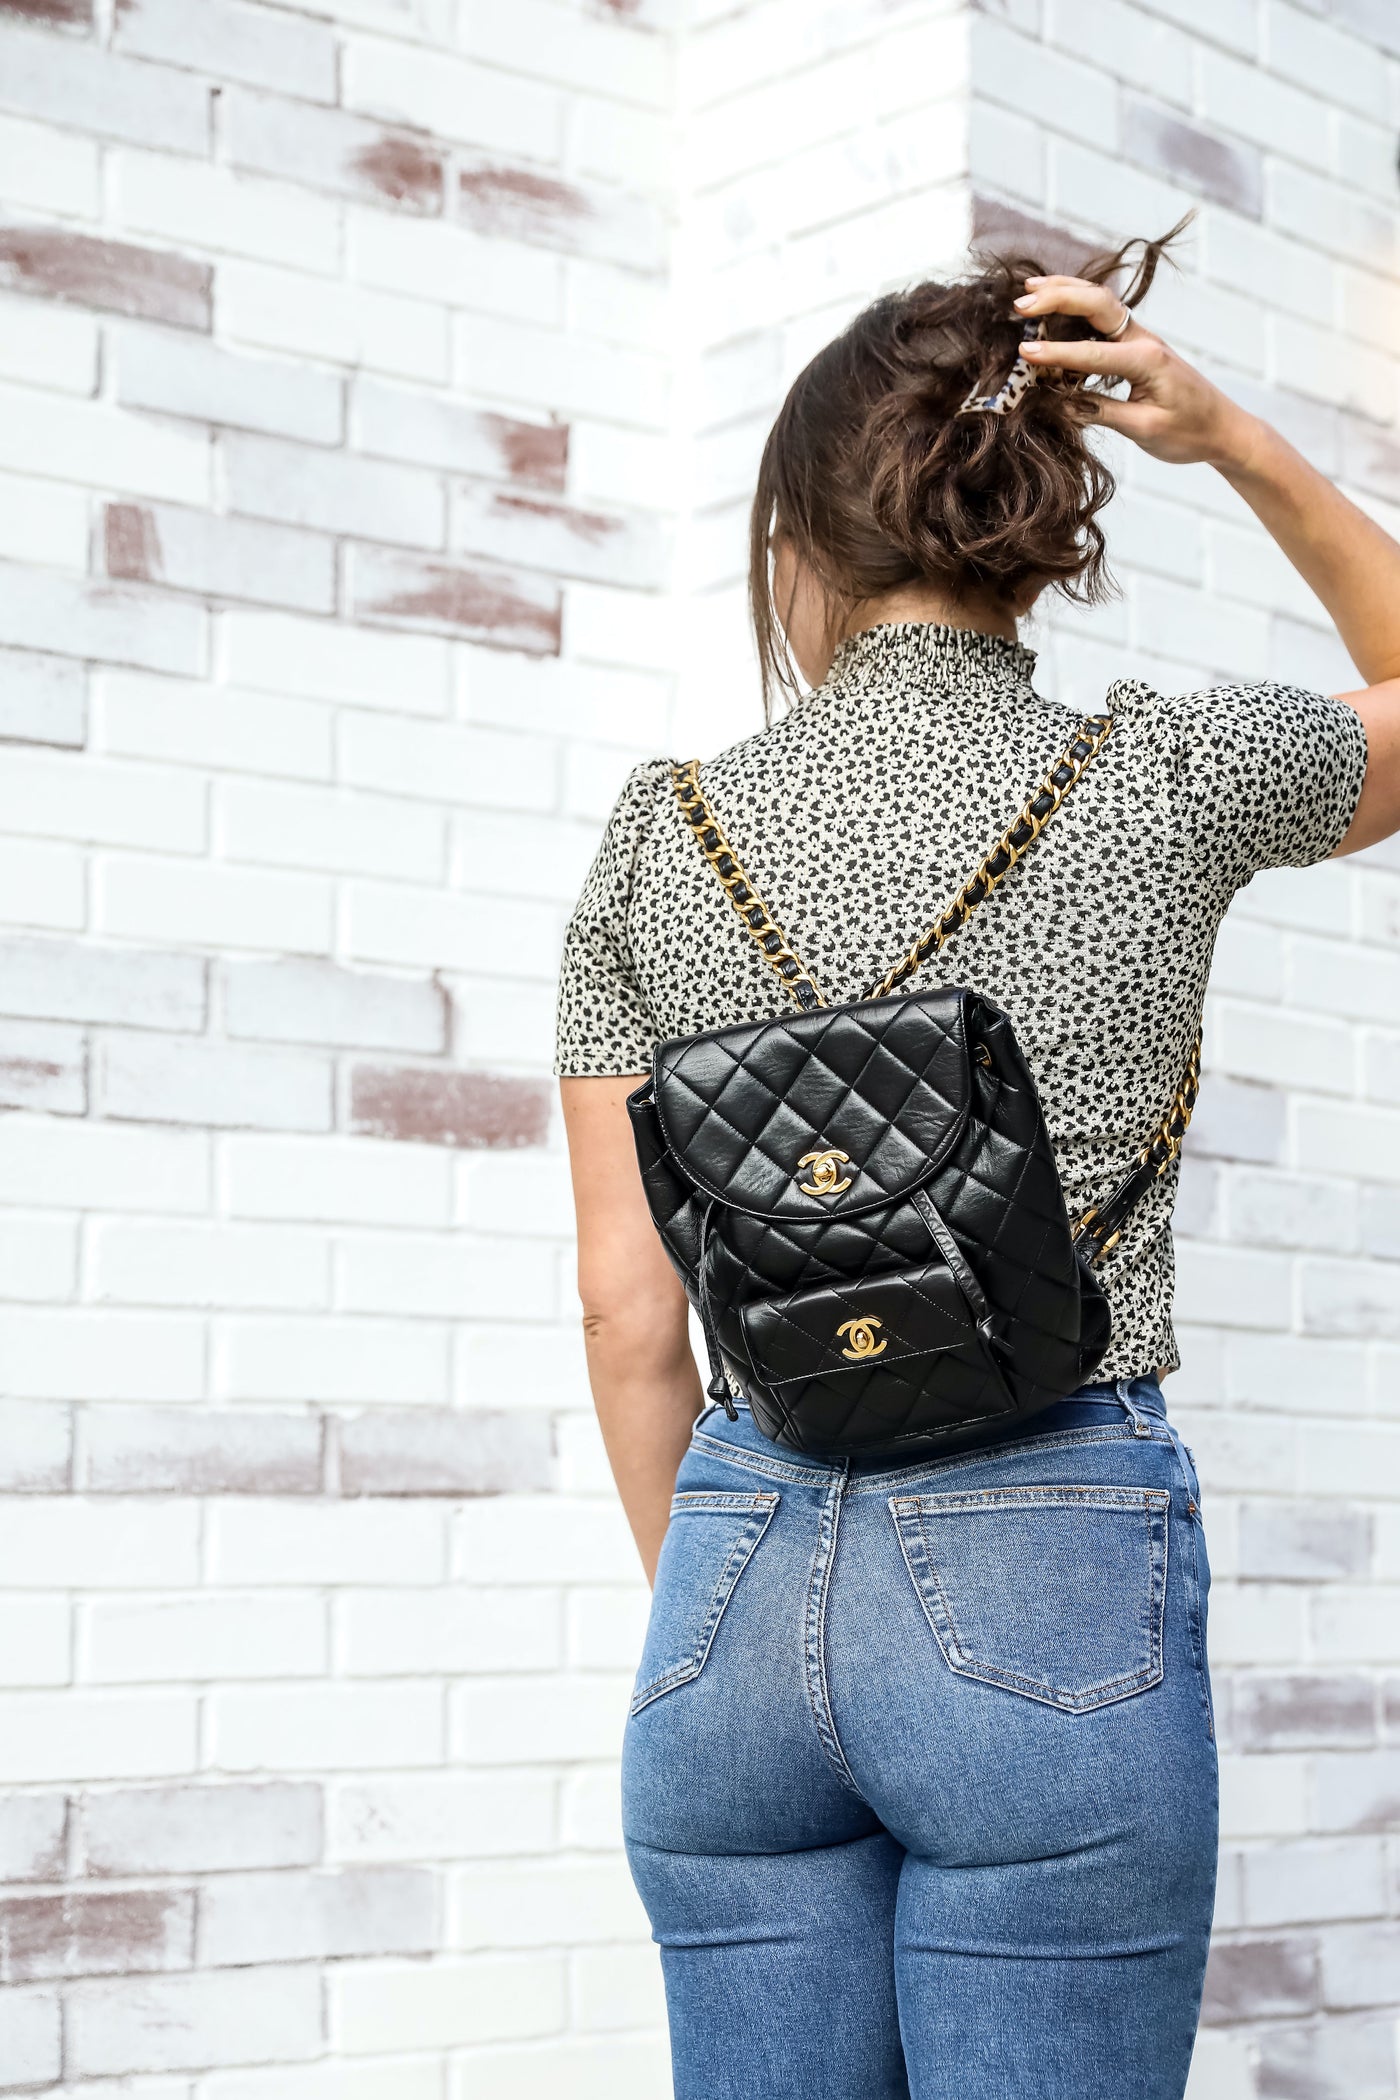 Chanel Vintage Black Lambskin Duma Backpack – Classic Coco